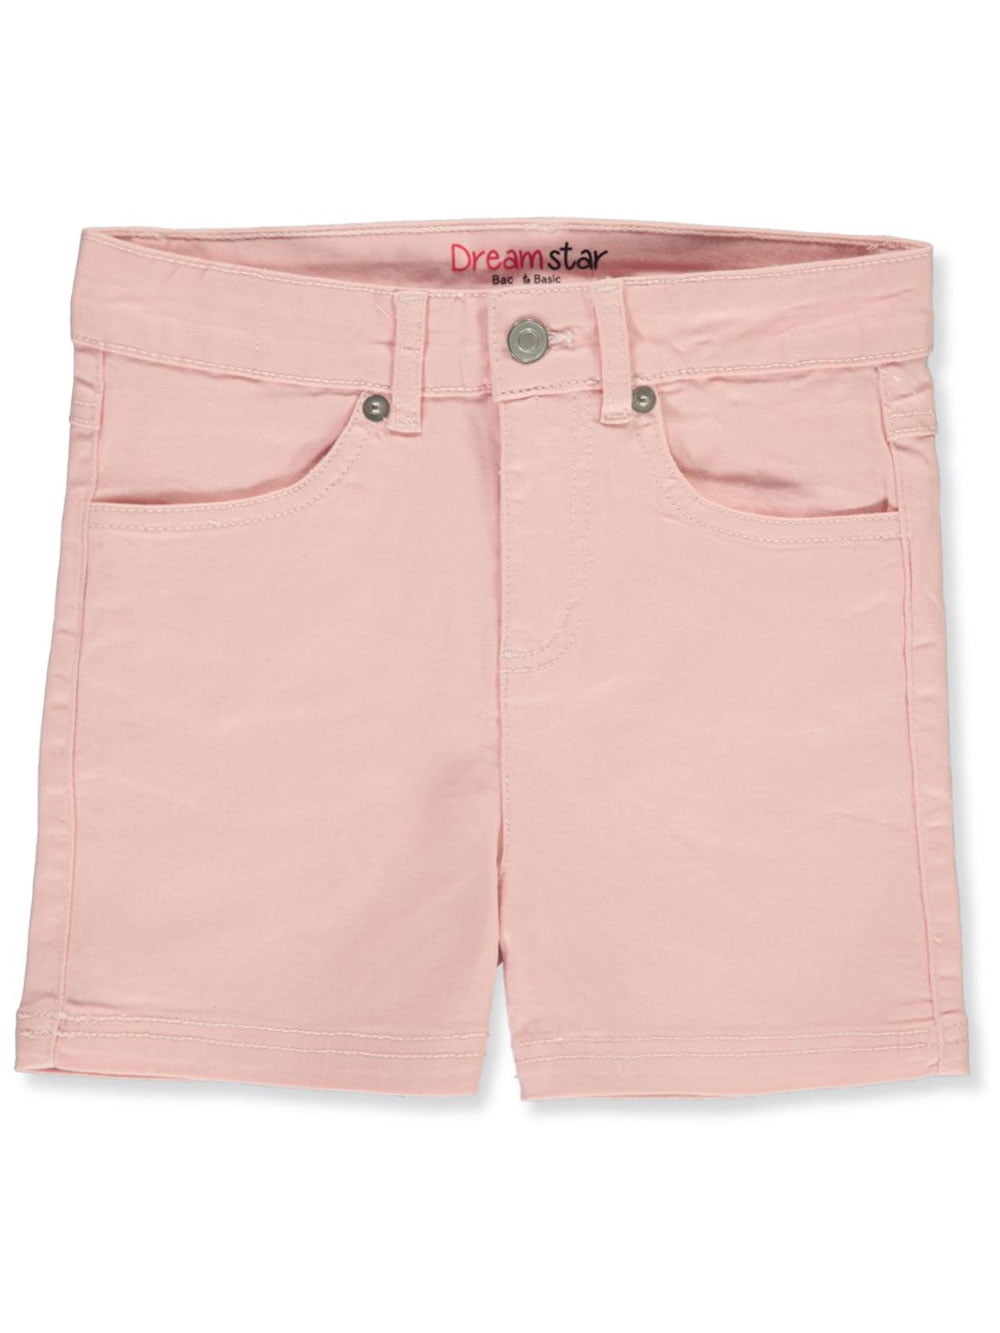 Dreamstar Girls' Twill Shorts (Big Girls) - Walmart.com